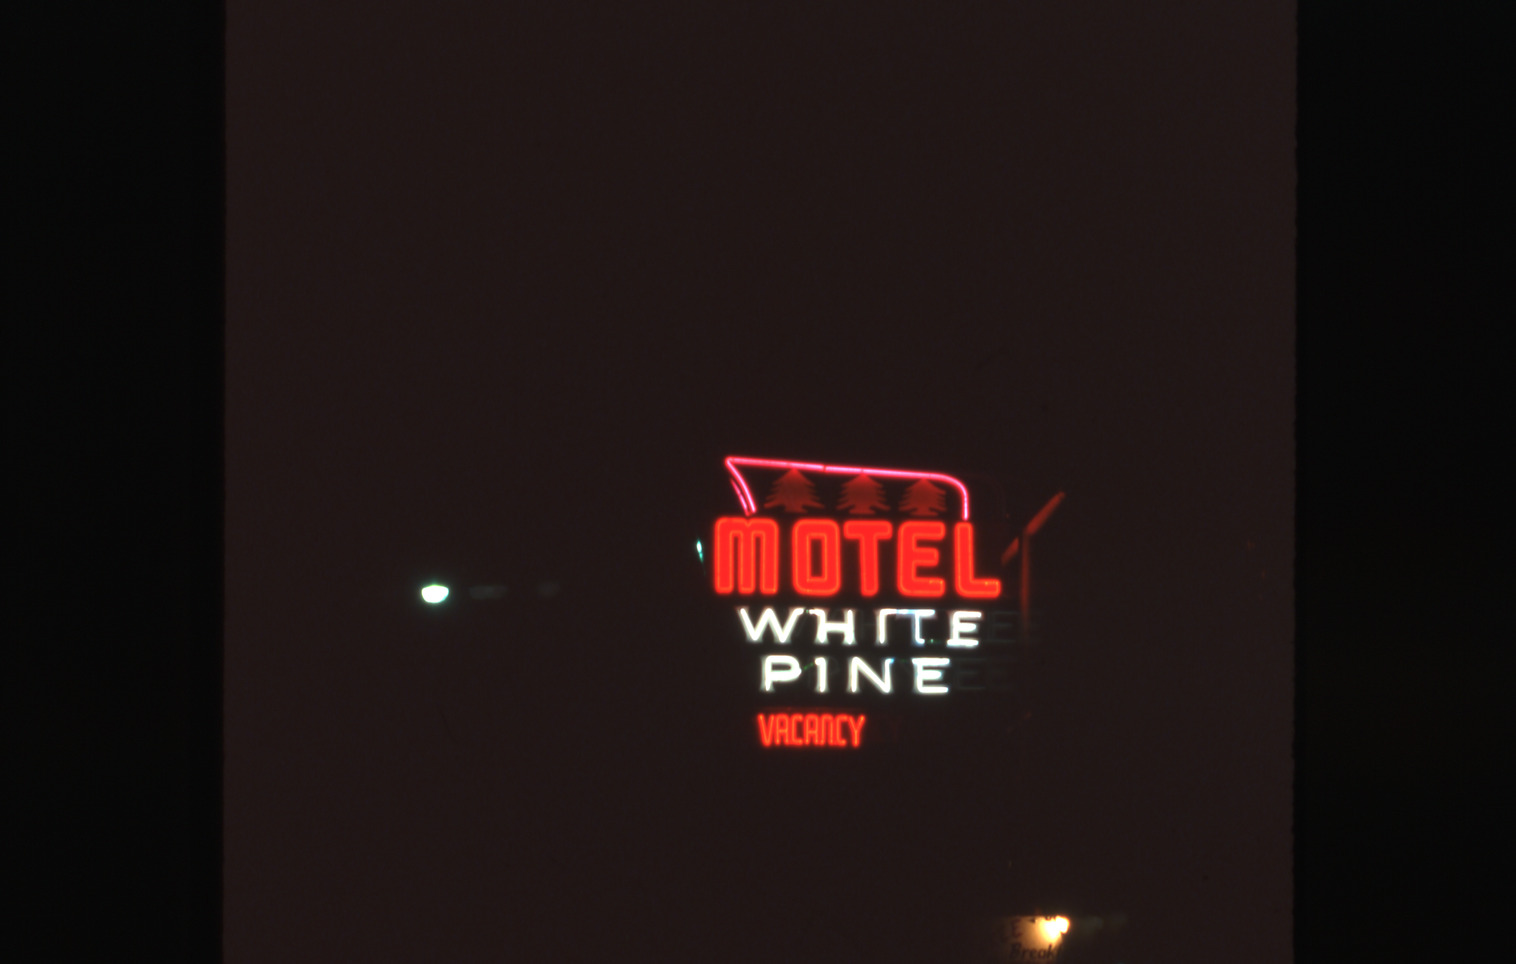 White Pine Motel pylon sign, Ely, Nevada: photographic print